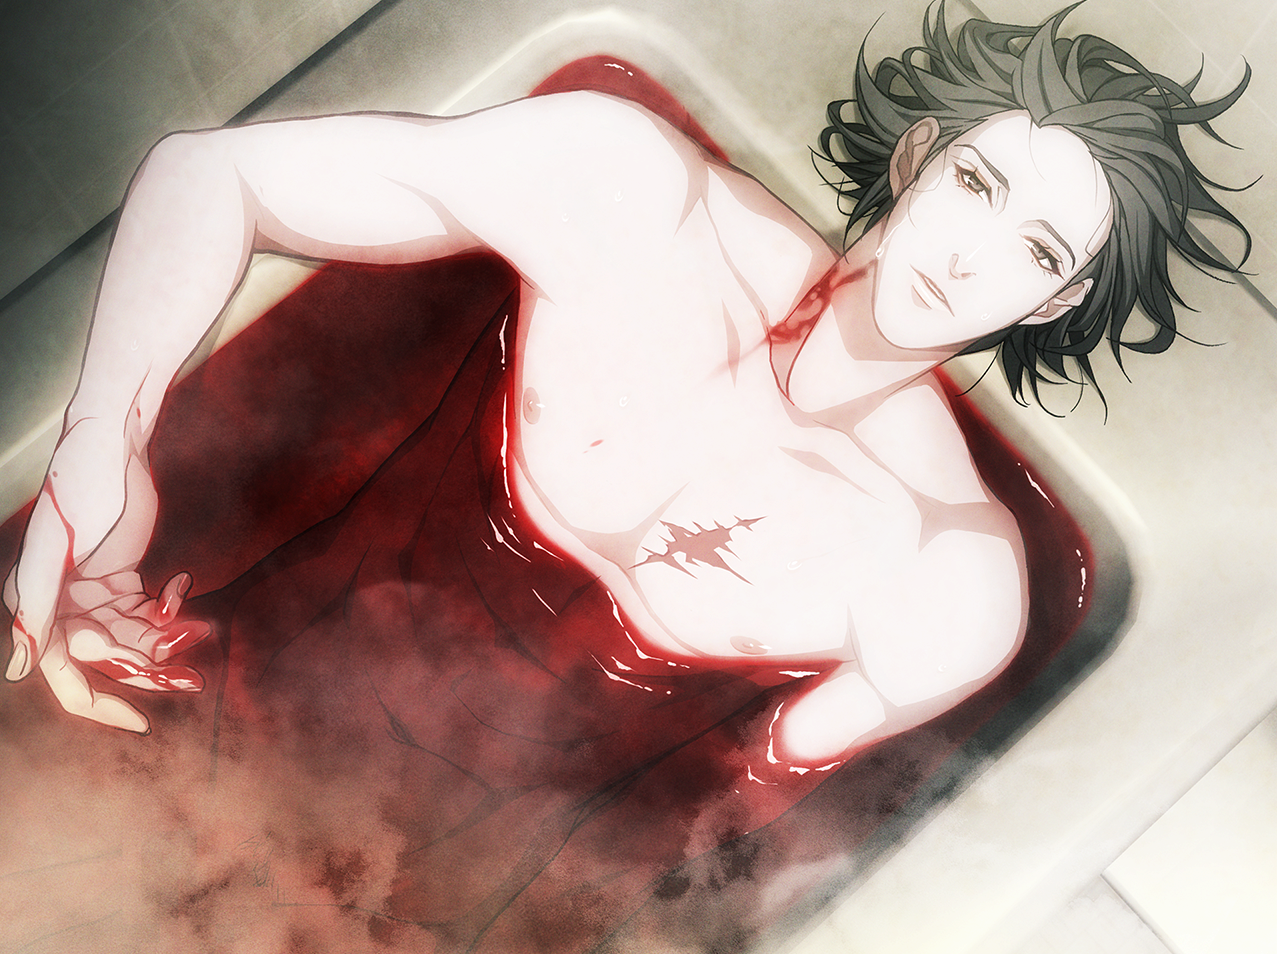 Youji lies in a bathtub full of blood.